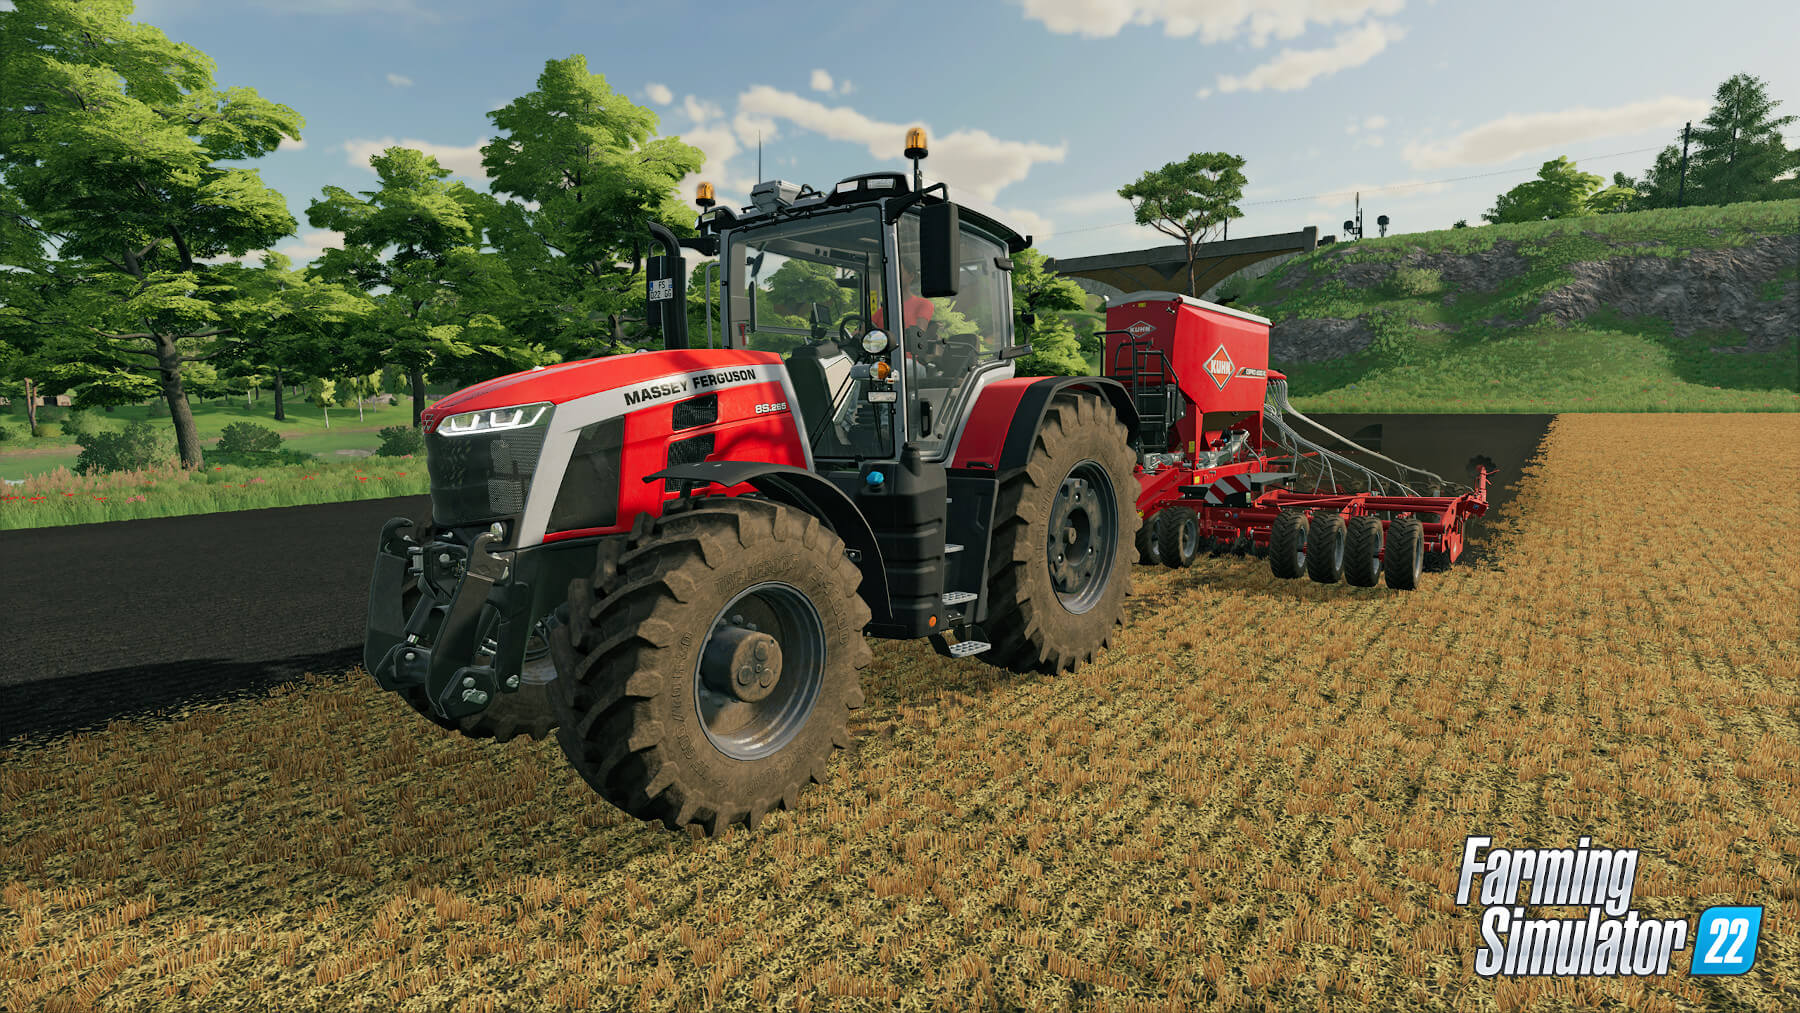 Tractor tilling a field in Farming Simulator 22